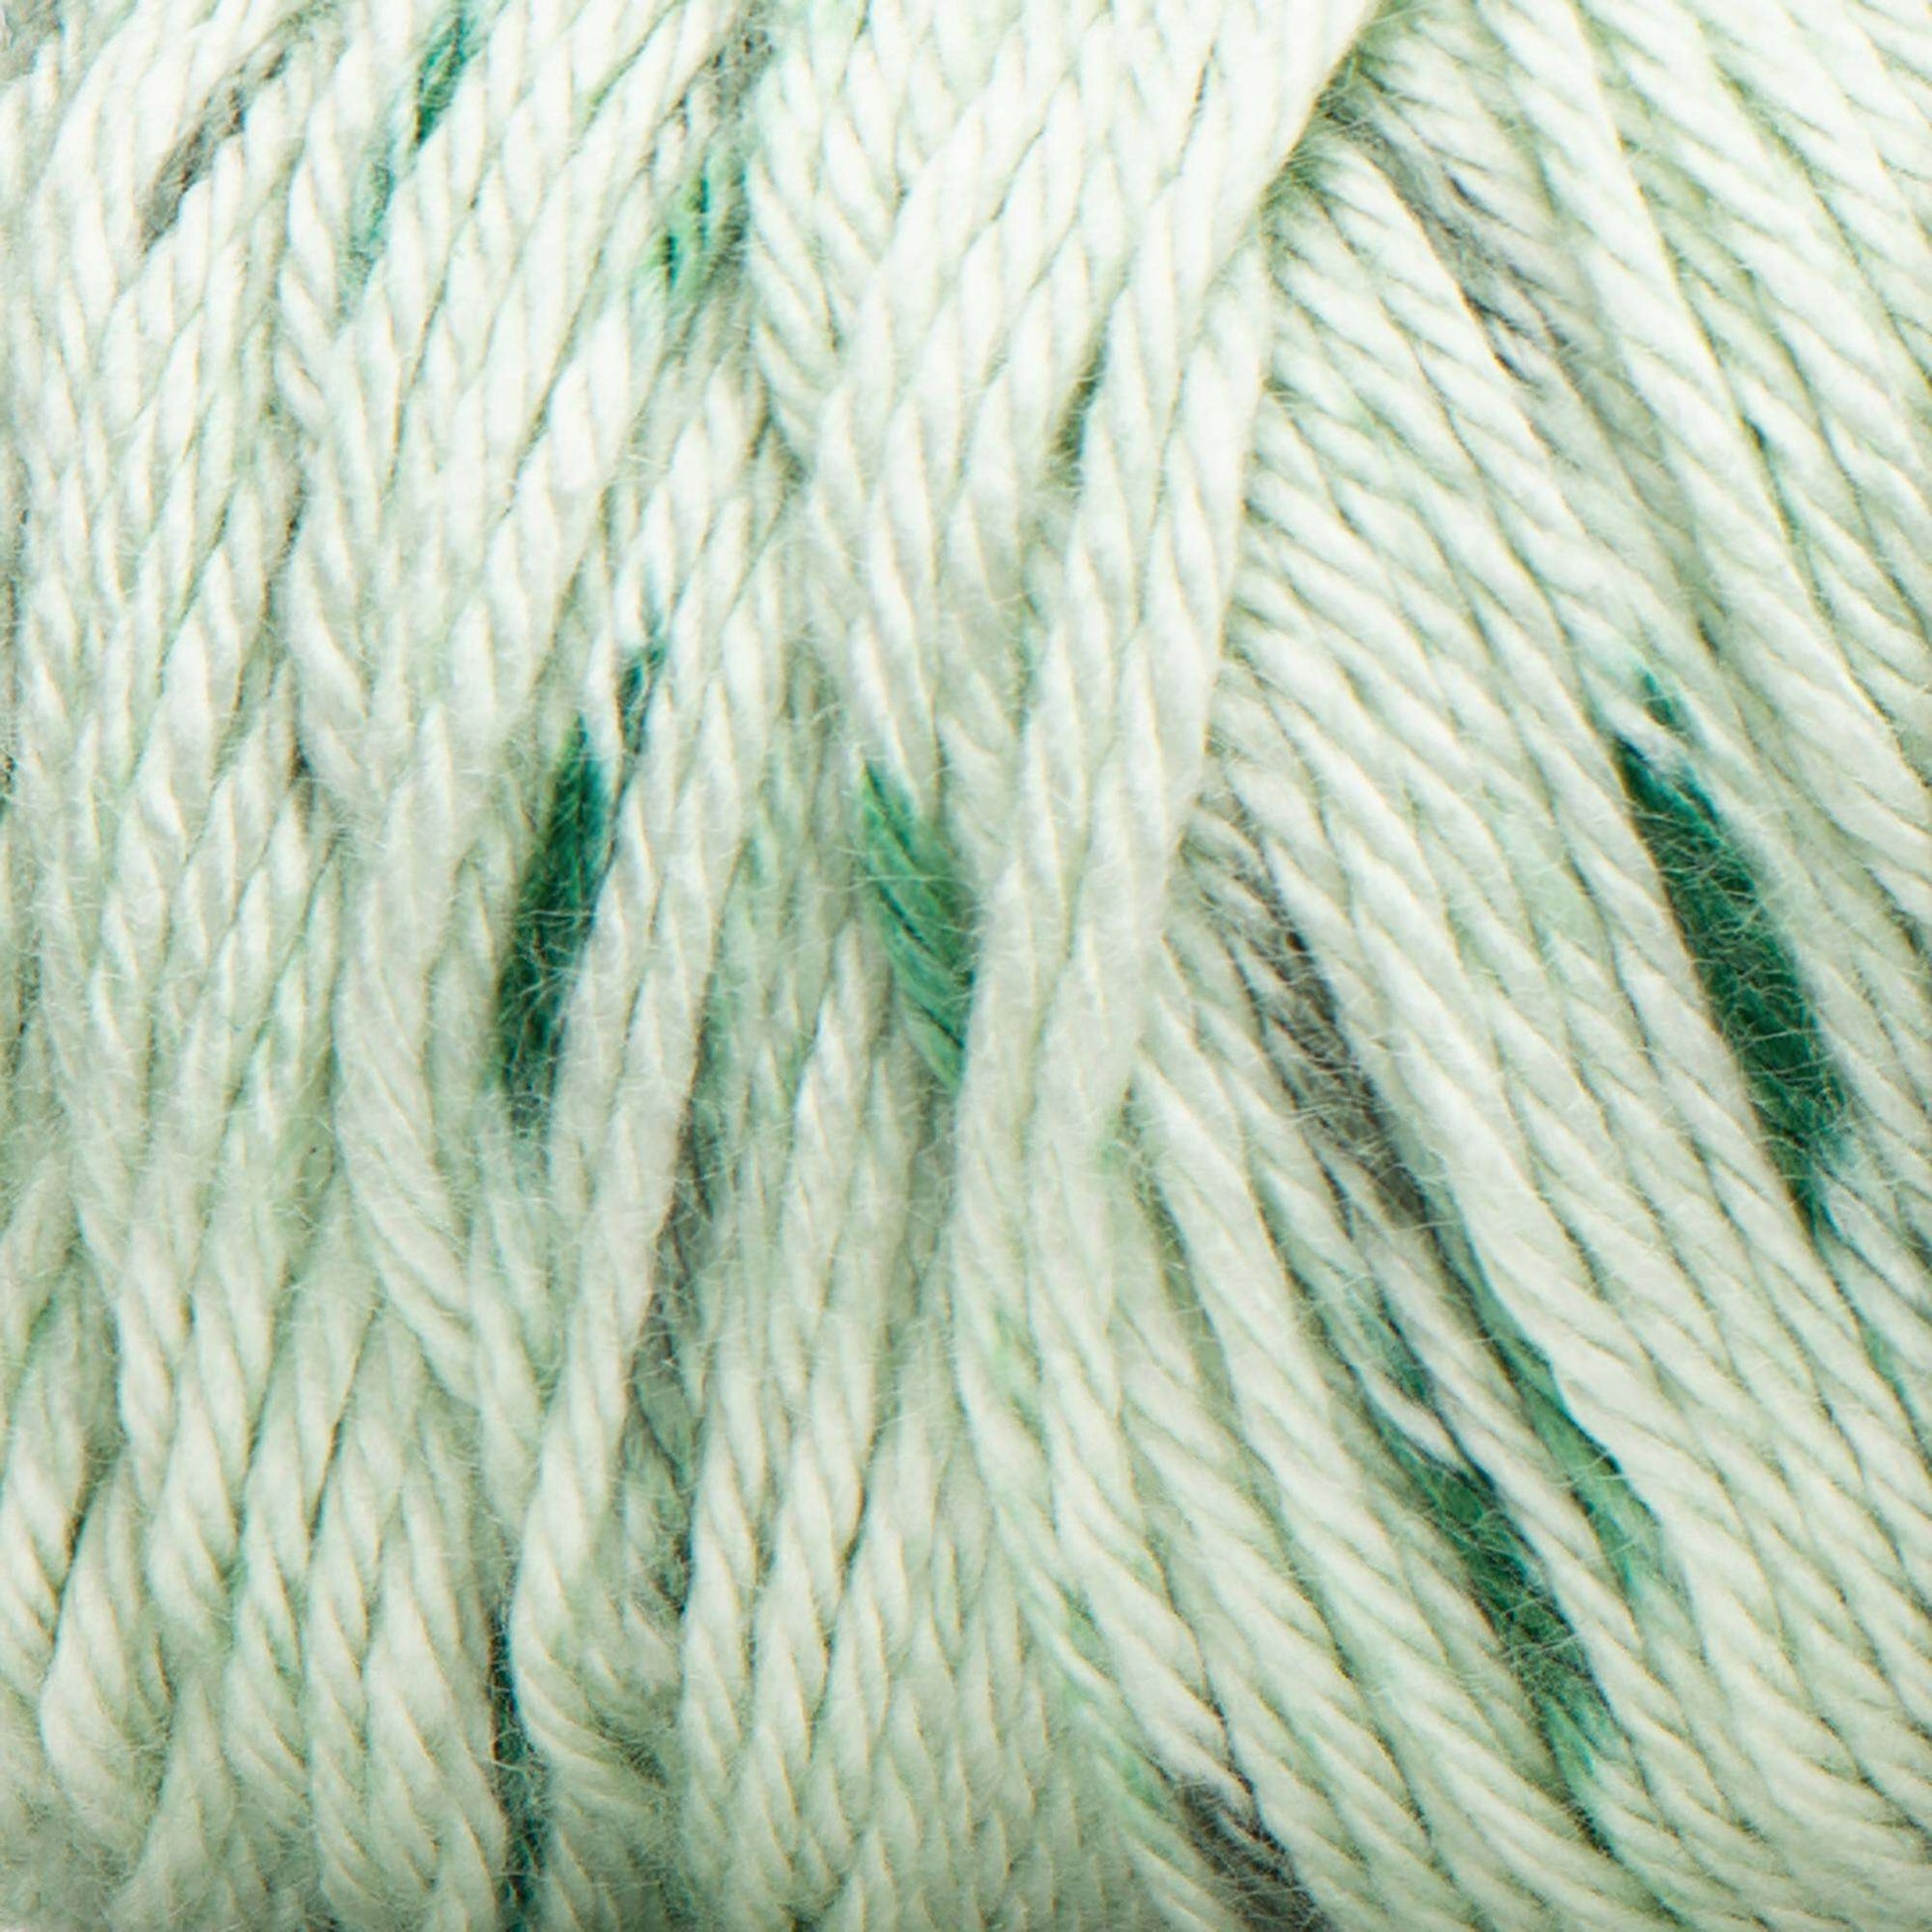 Caron Simply Soft Speckle #4 Medium Acrylic Yarn, Abyss 5oz/141g, 235 Yards (3 Pack), Size: Three-Pack